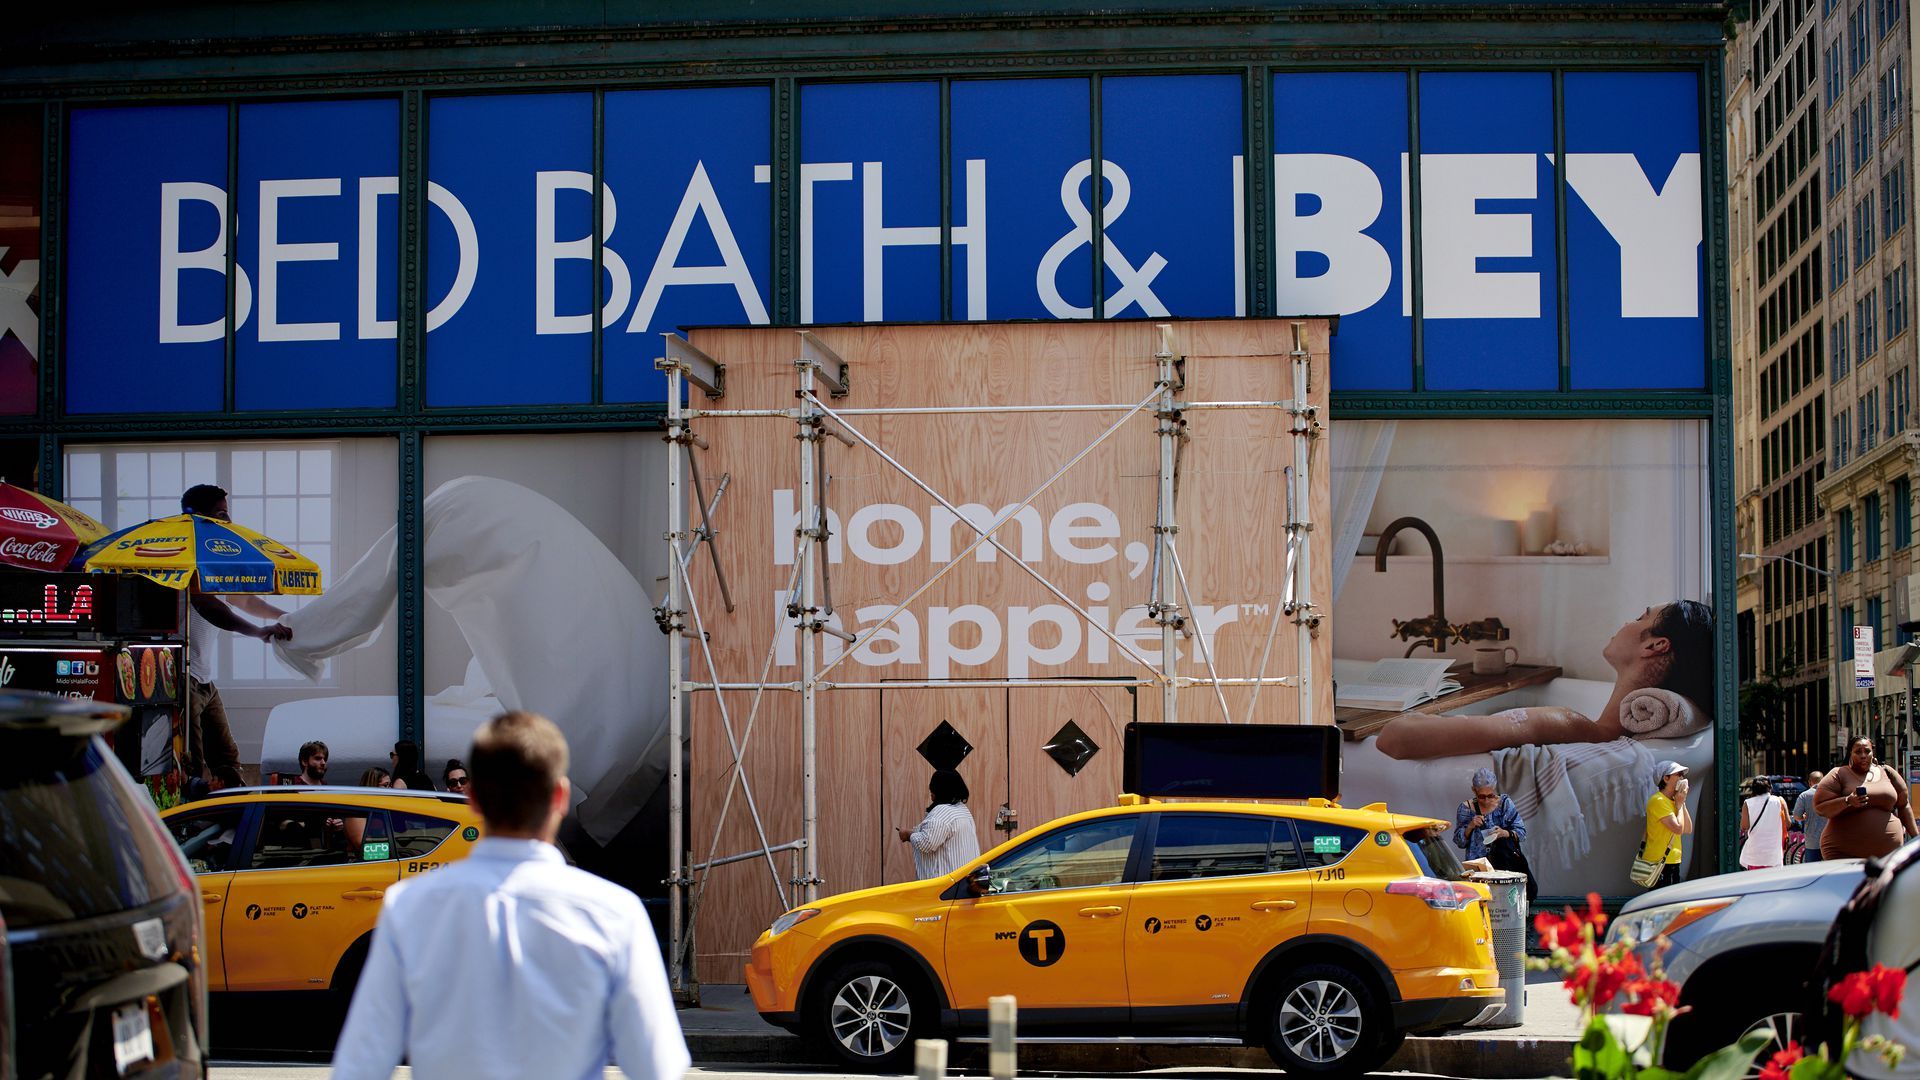 Bed Bath & Beyond storefront under construction